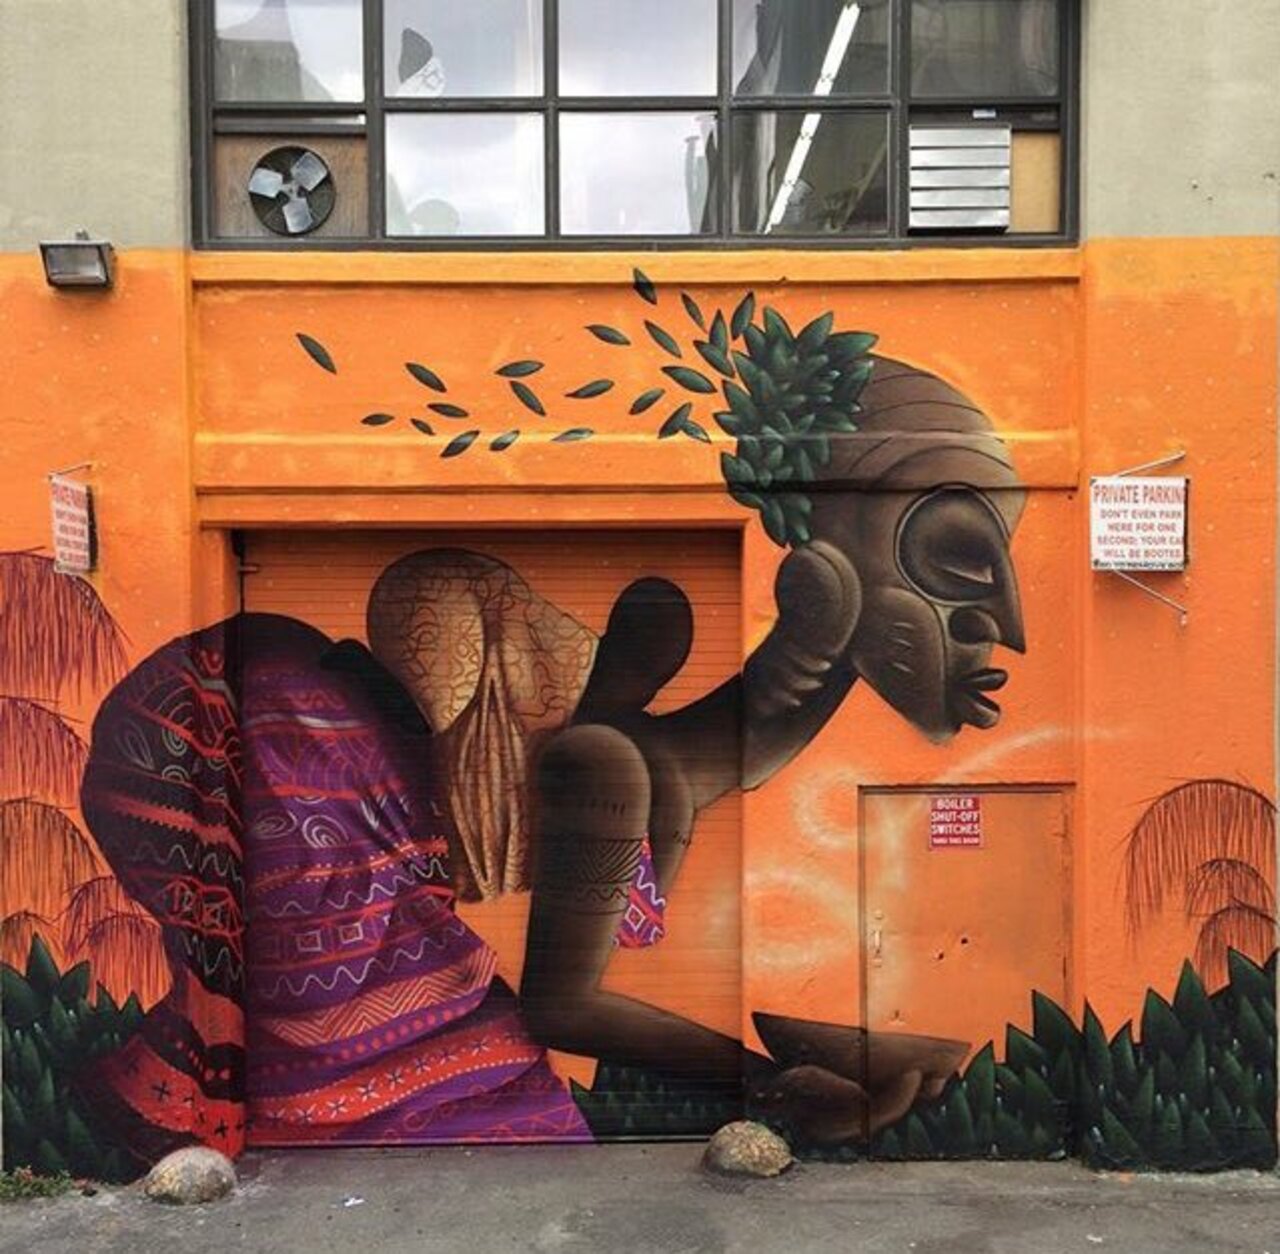 New Street Art by Alexandre Keto in NYC 

#art #graffiti #mural #streetart https://t.co/NU39TeuFZ9